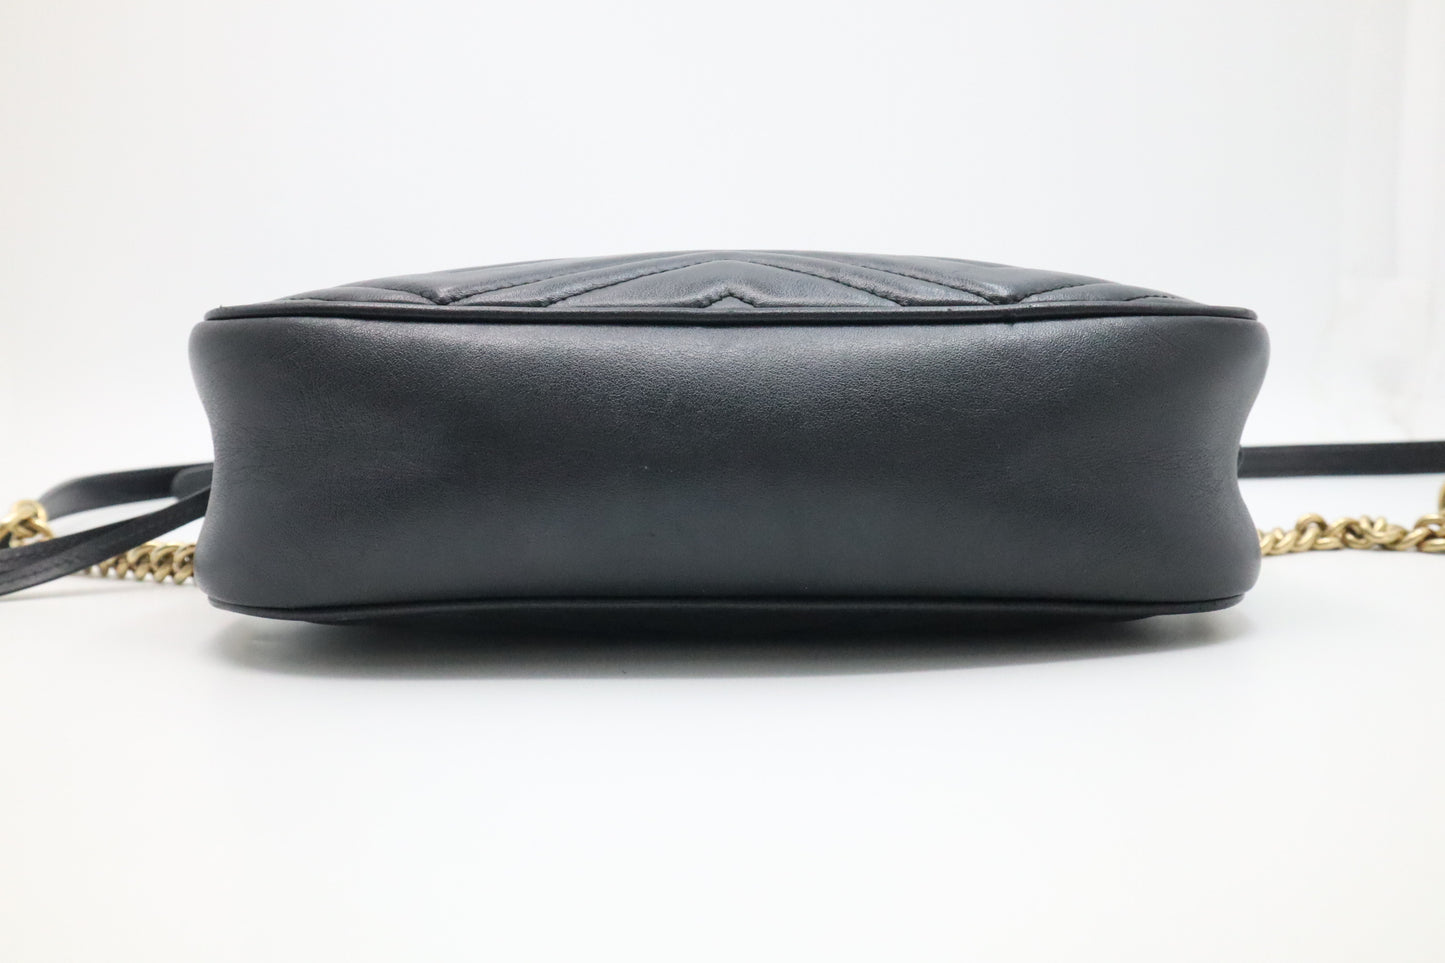 Gucci Marmont Shoulder Bag in Black Leather